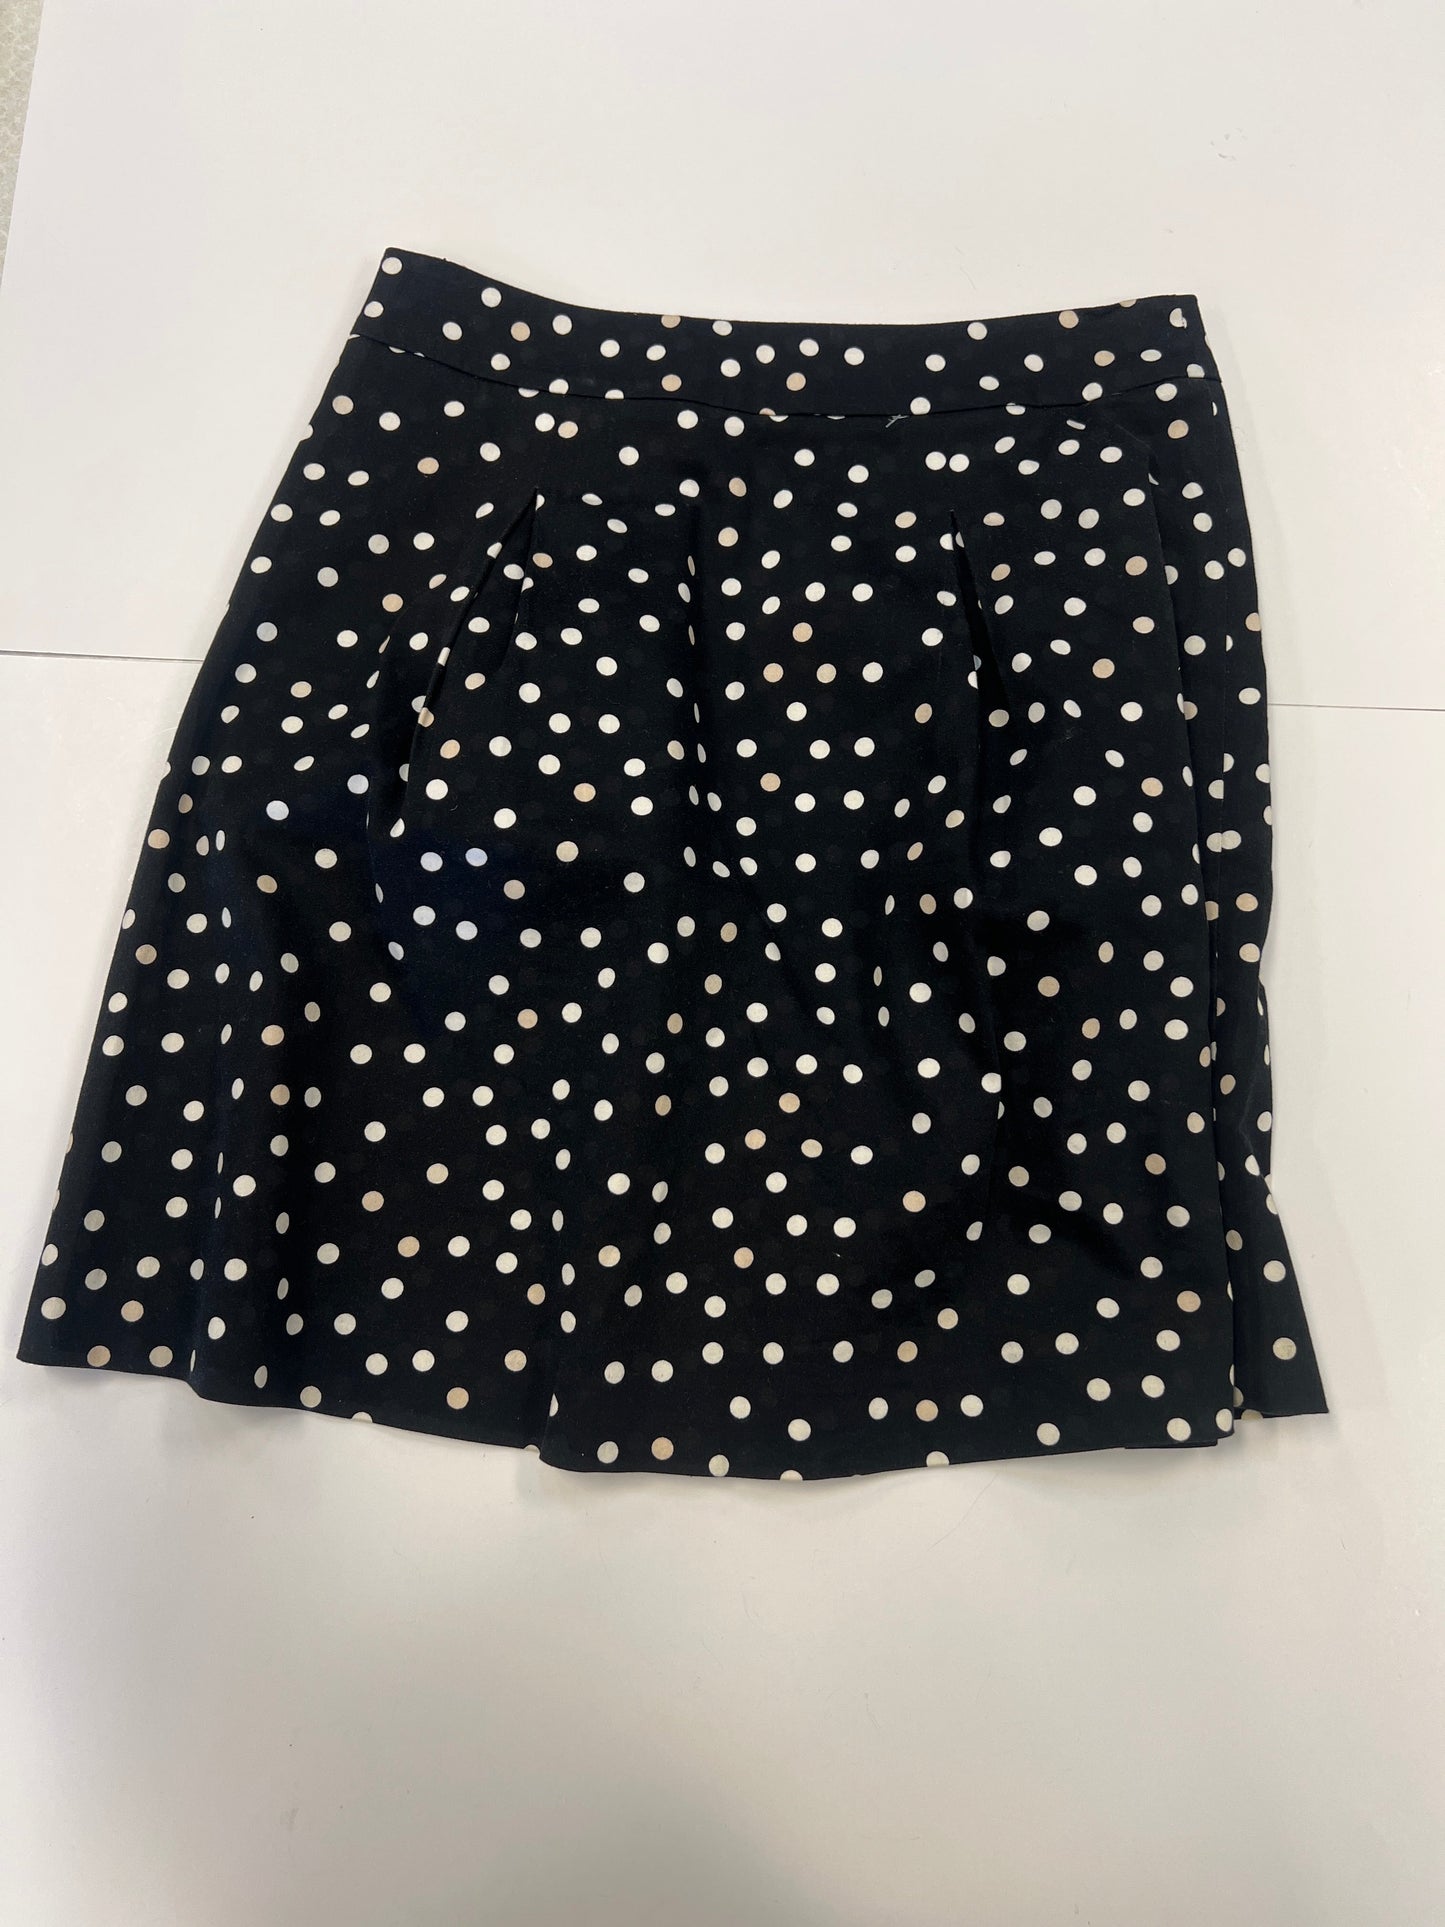 Skirt Midi By White House Black Market  Size: 2